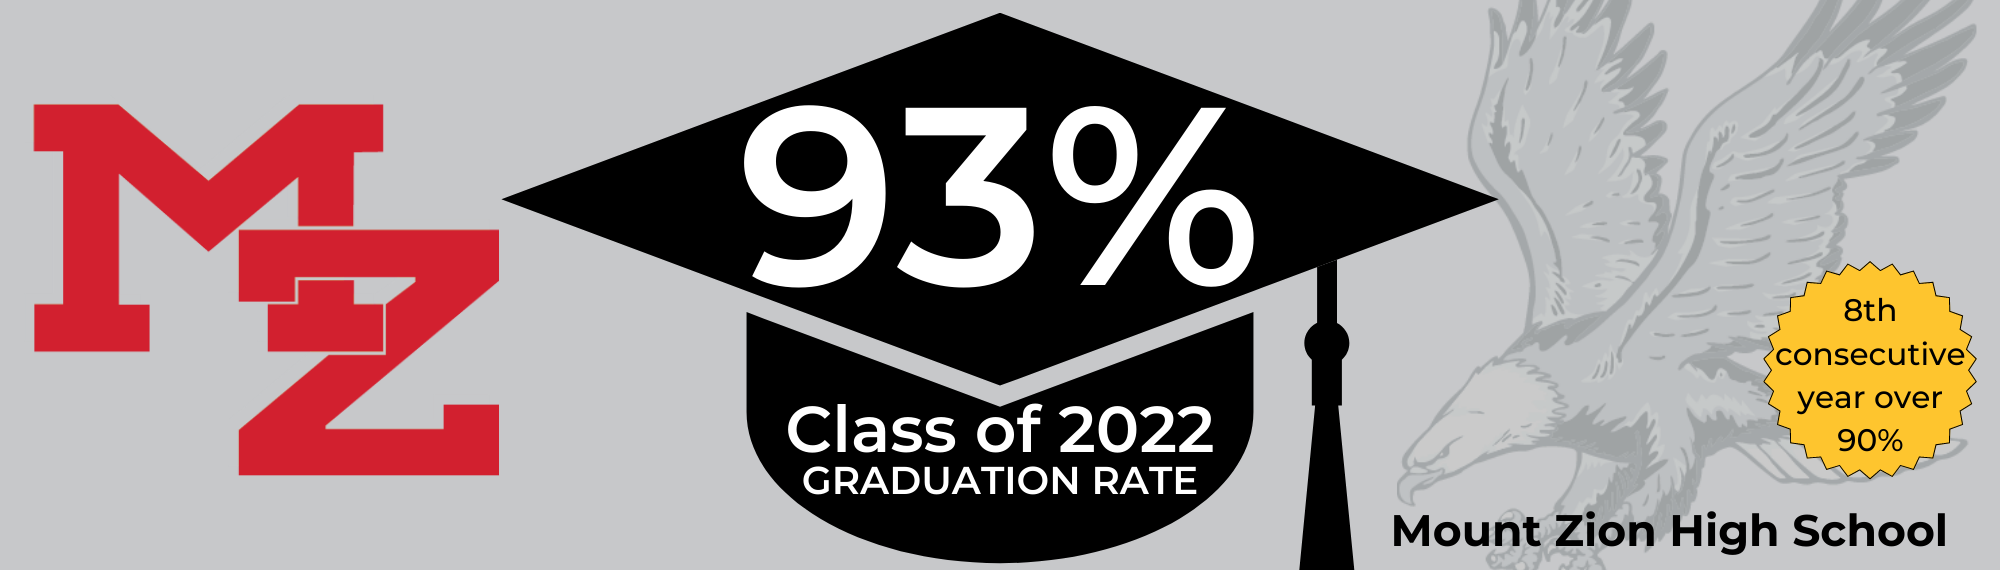 MZH Graduation Rate